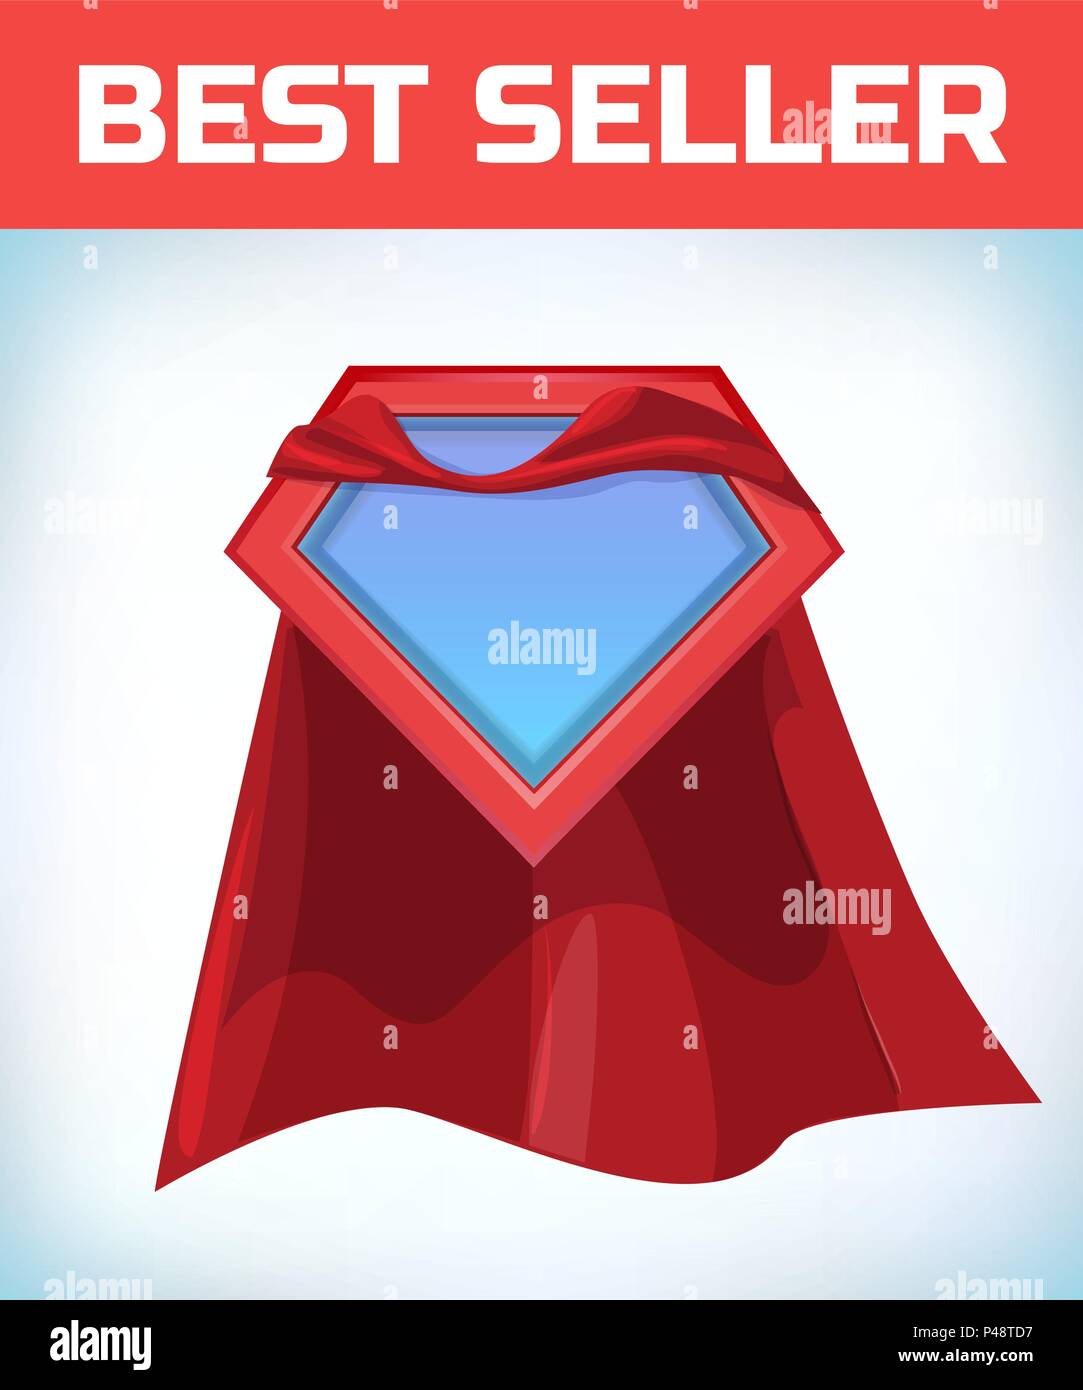 superhero logo list